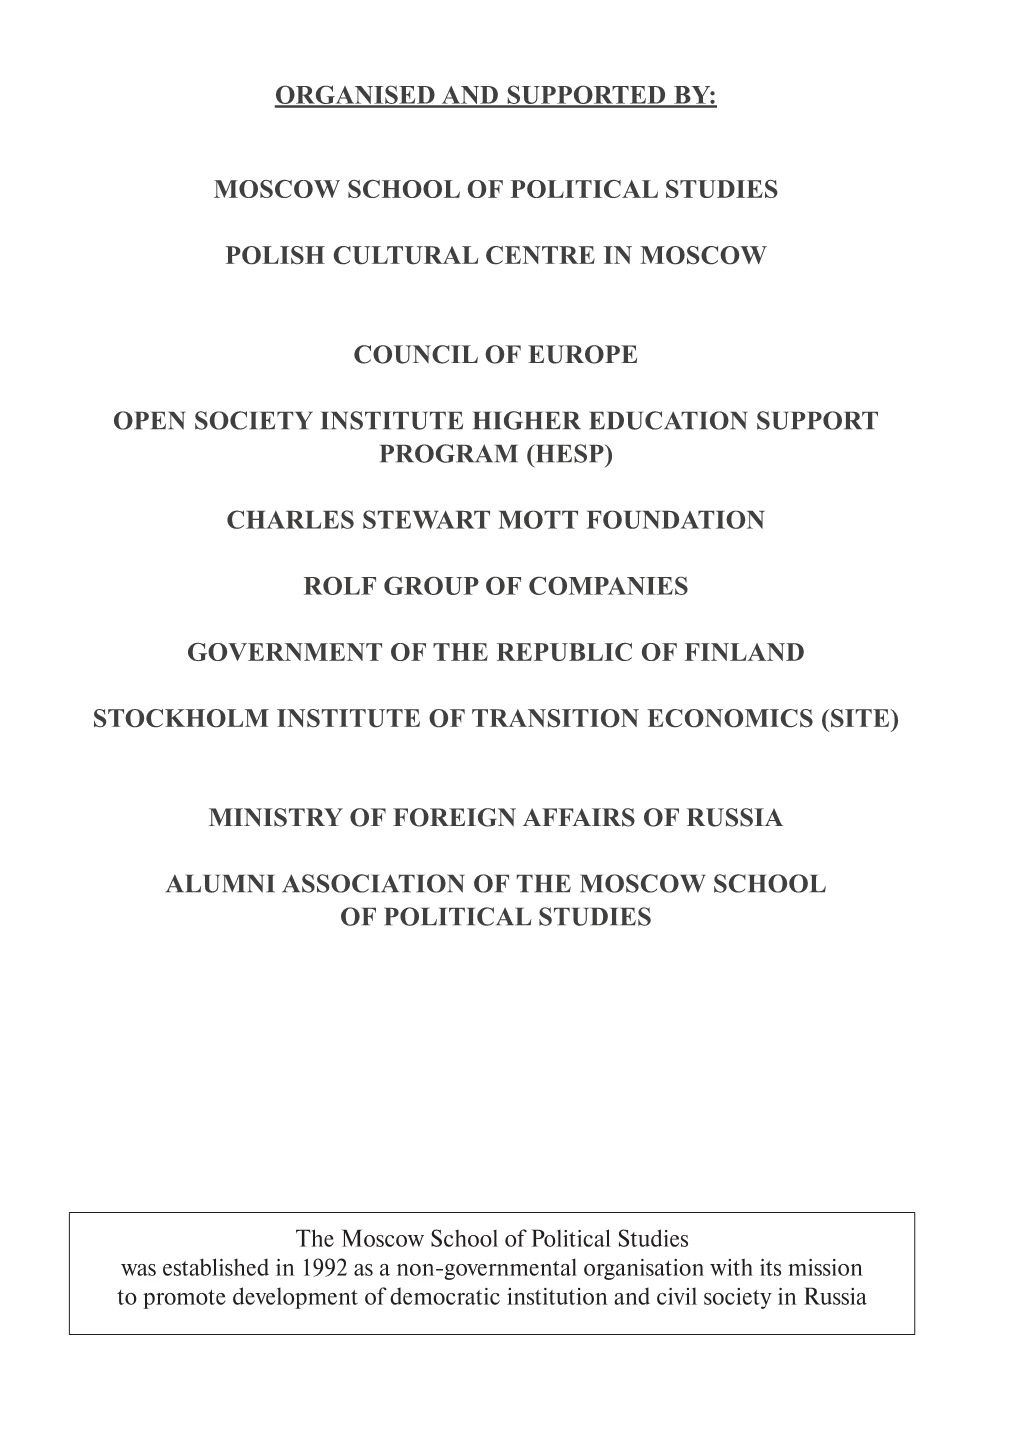 Moscow School of Political Studies Polish Cultural